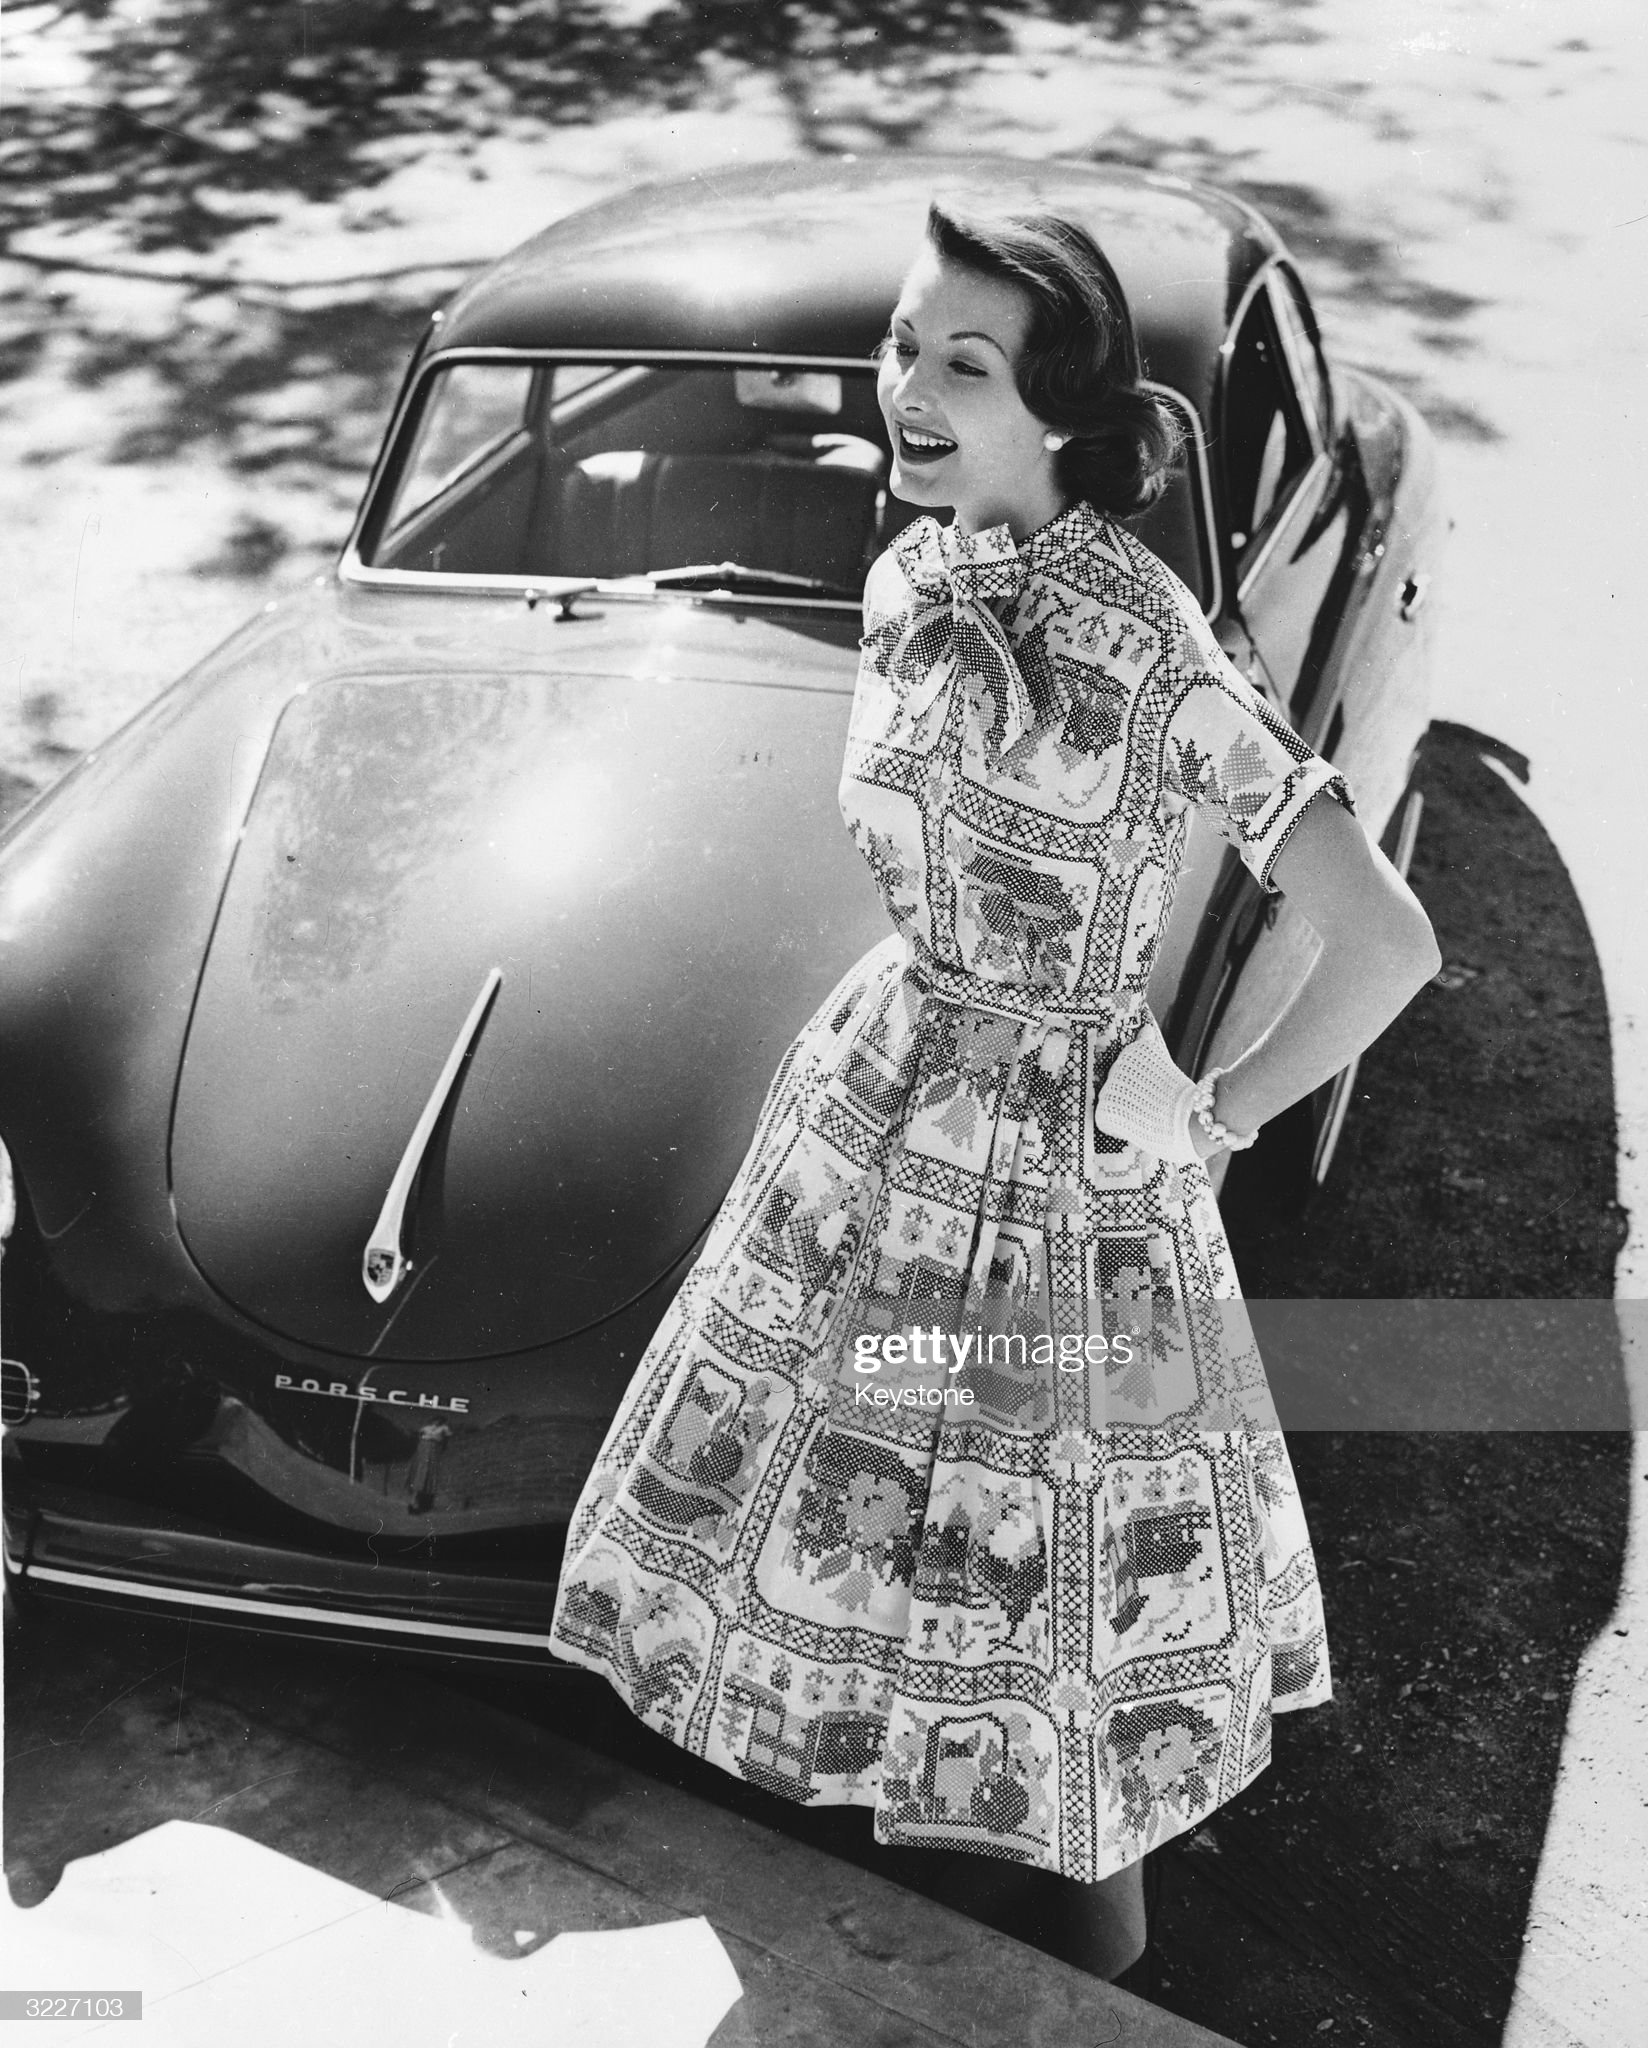 A woman models a cotton printed dress next to a Porsche sportscar in 1957.